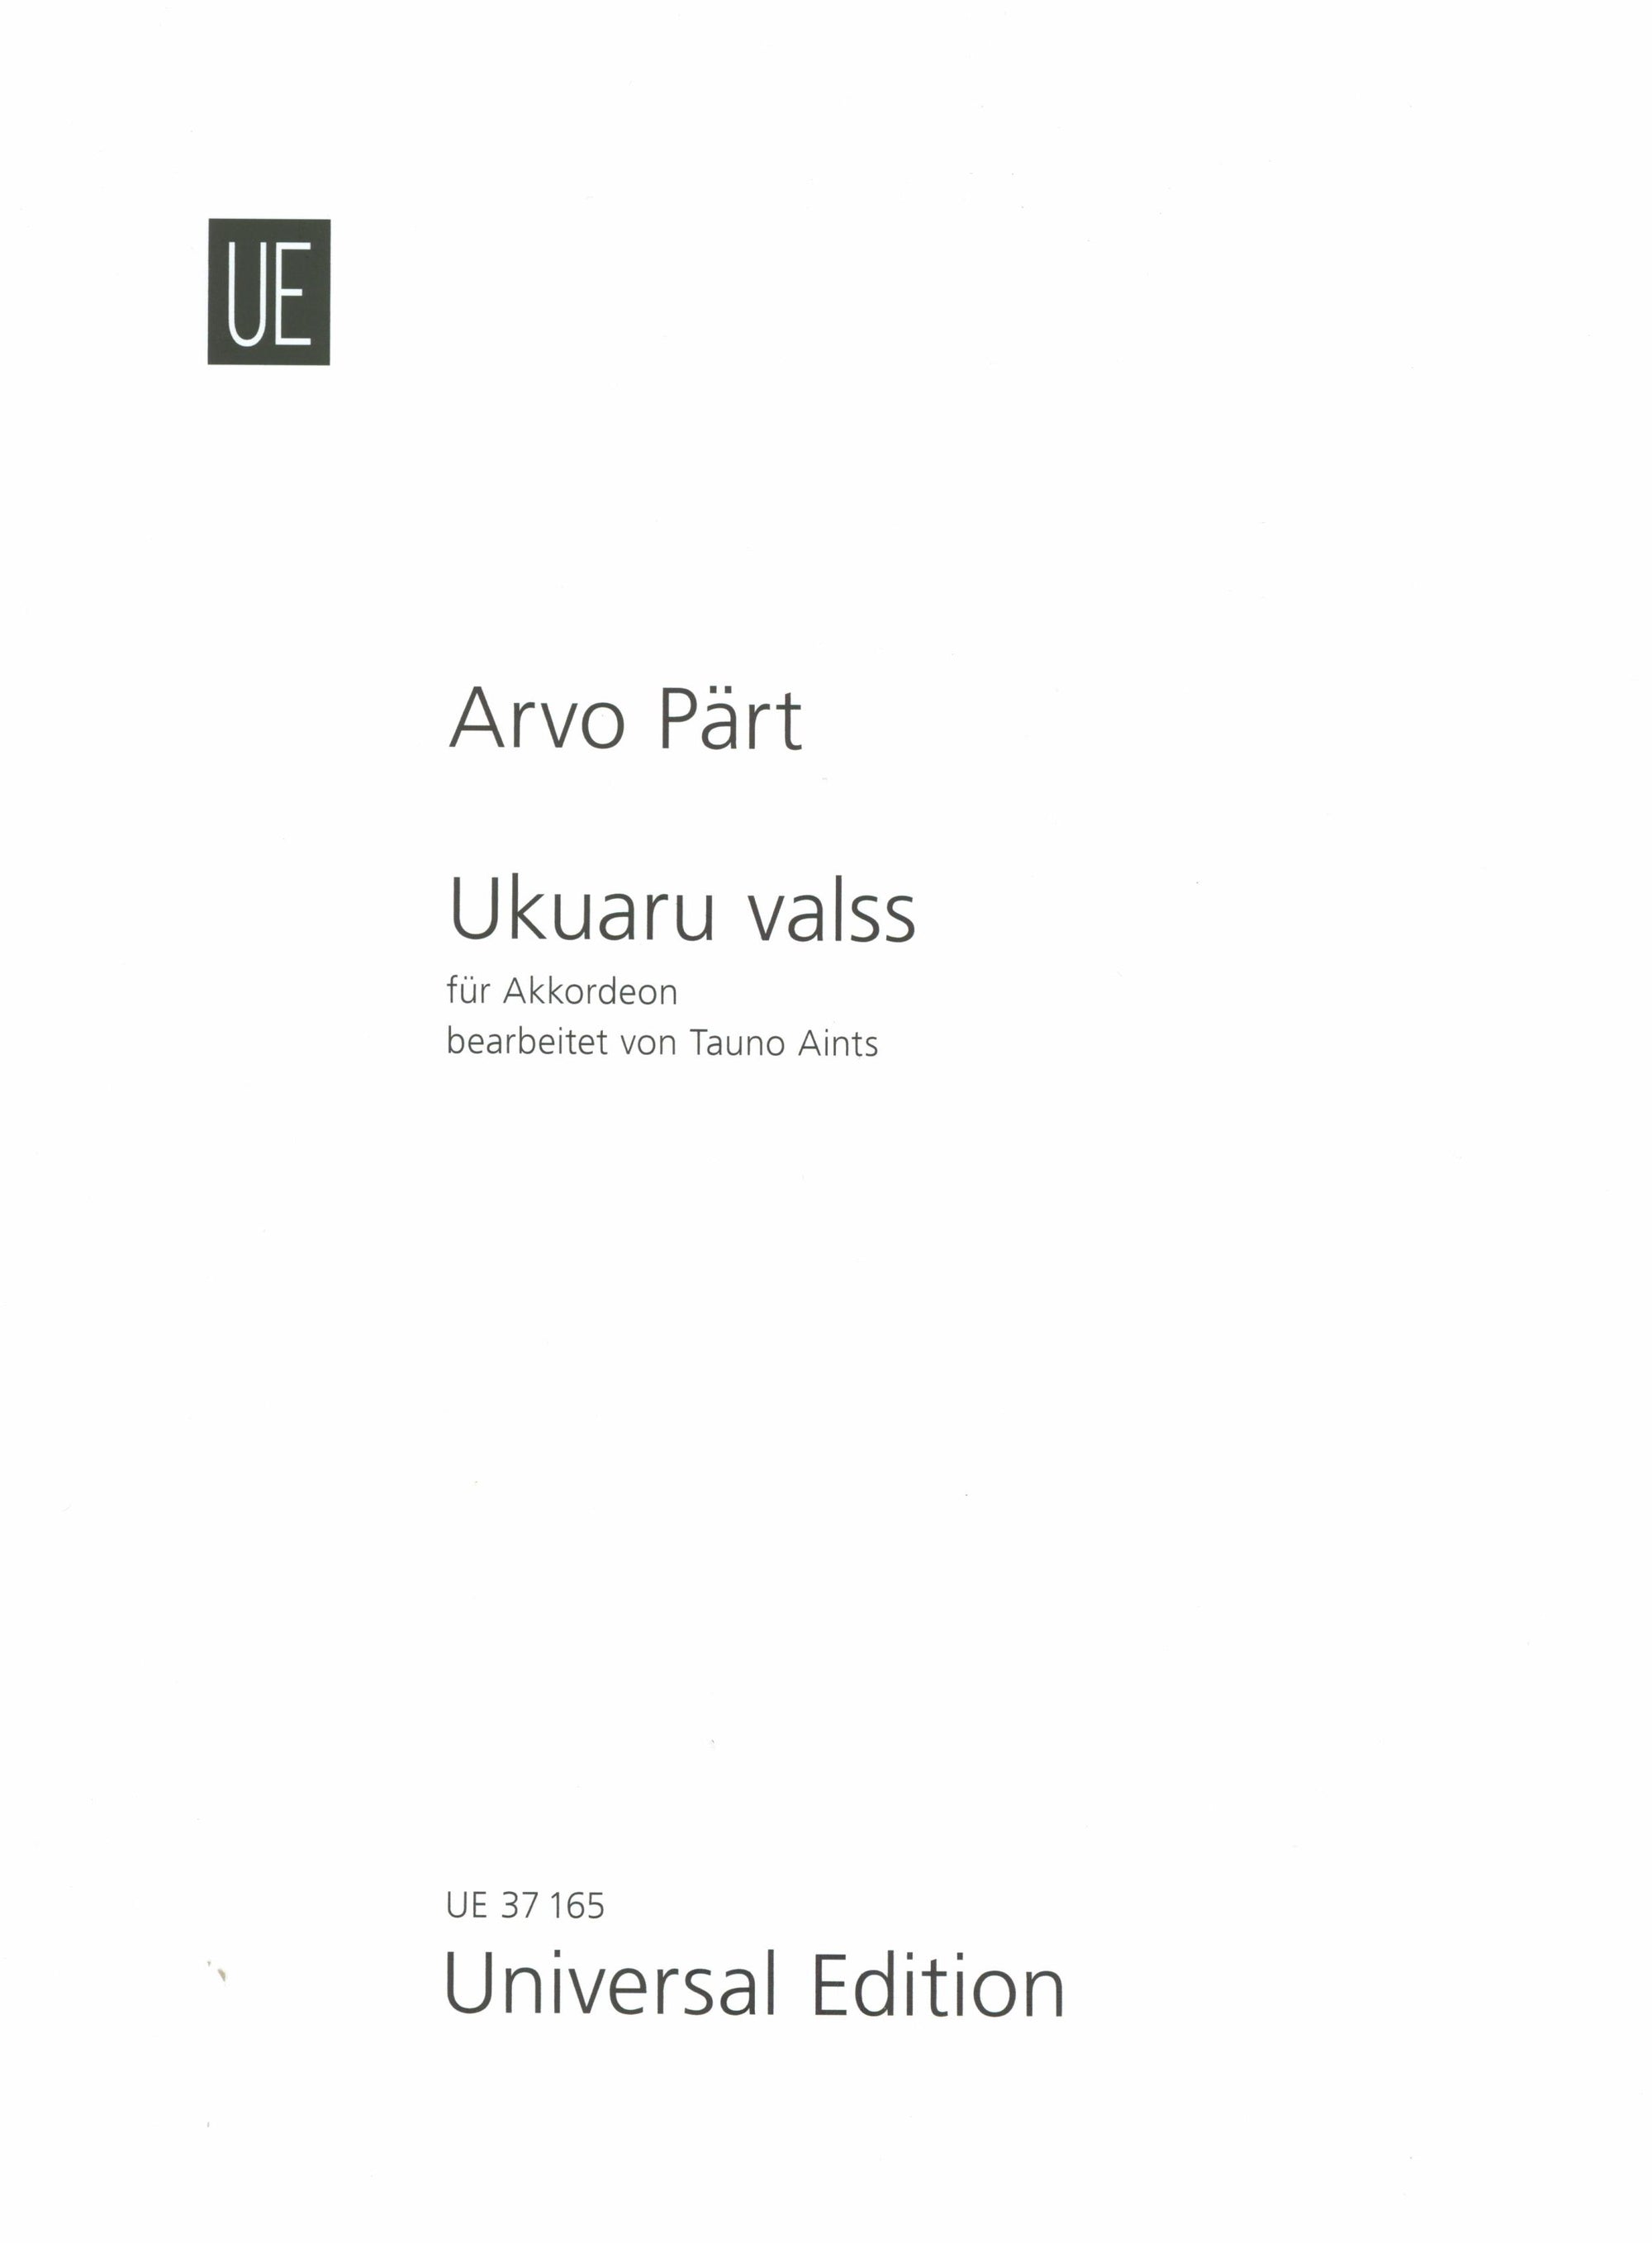 Pärt: Ukuaru valss (arr. for accordion)